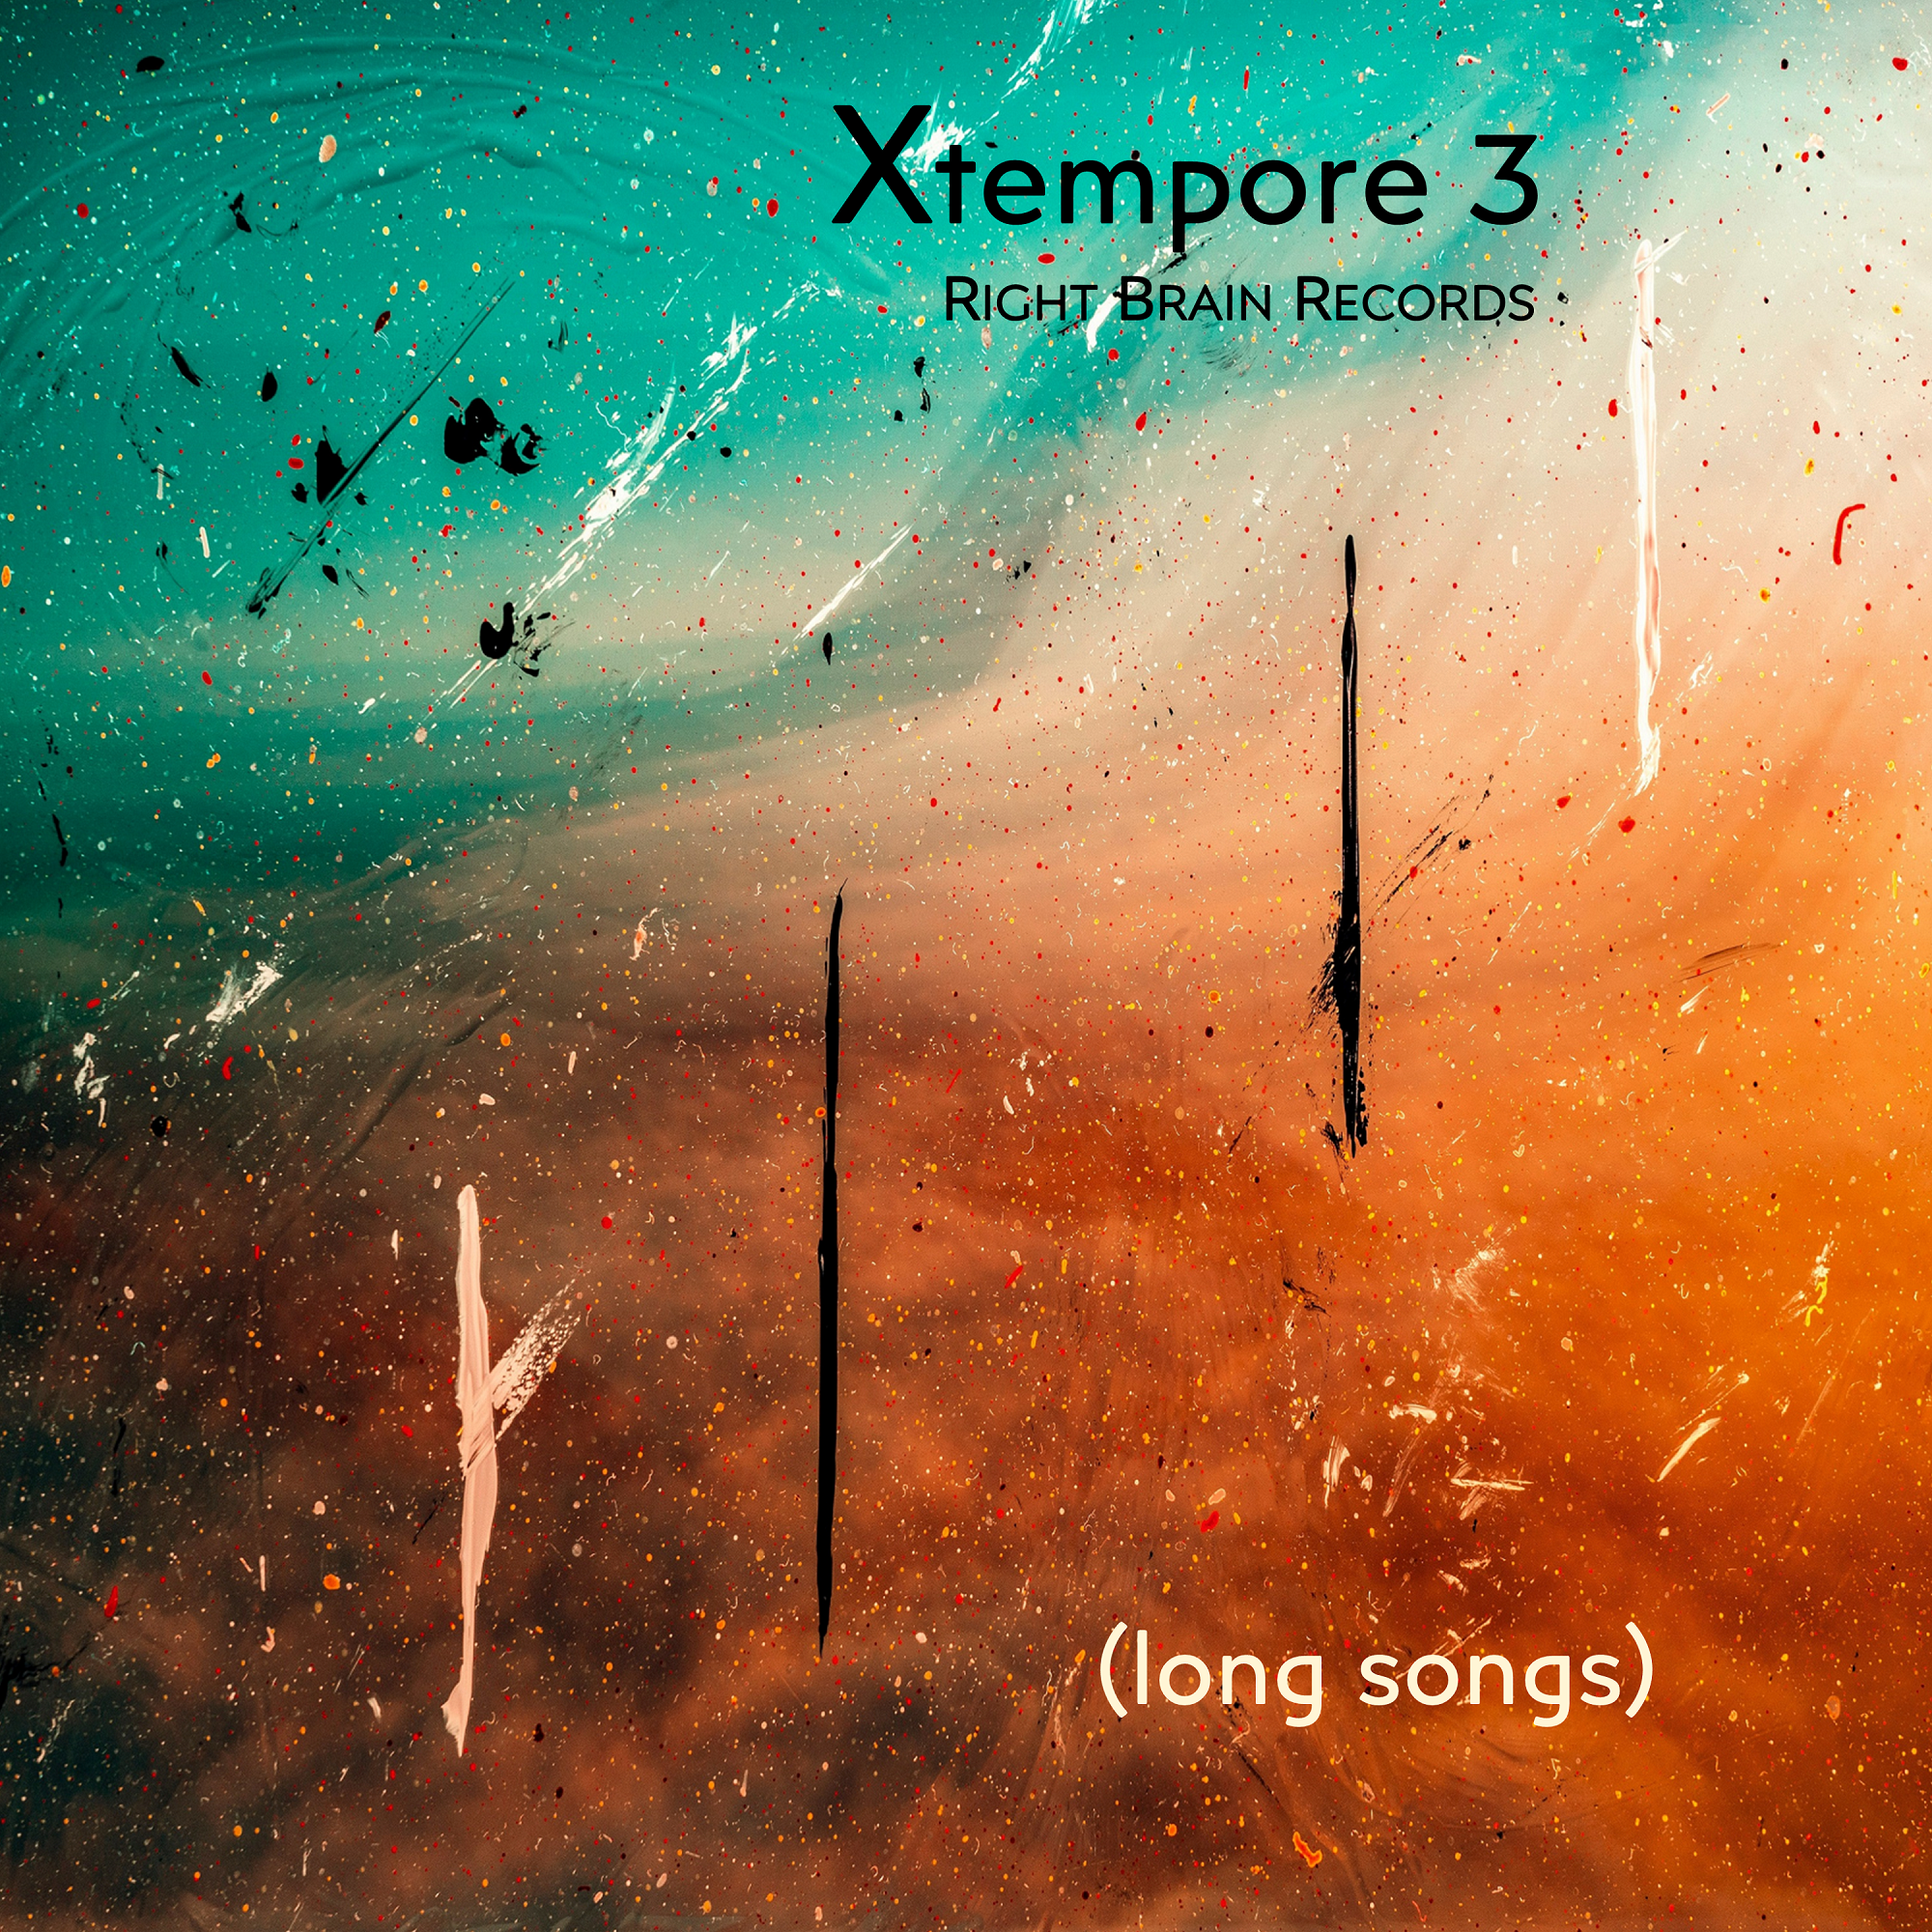 RBR Compilation: Xtempore 3